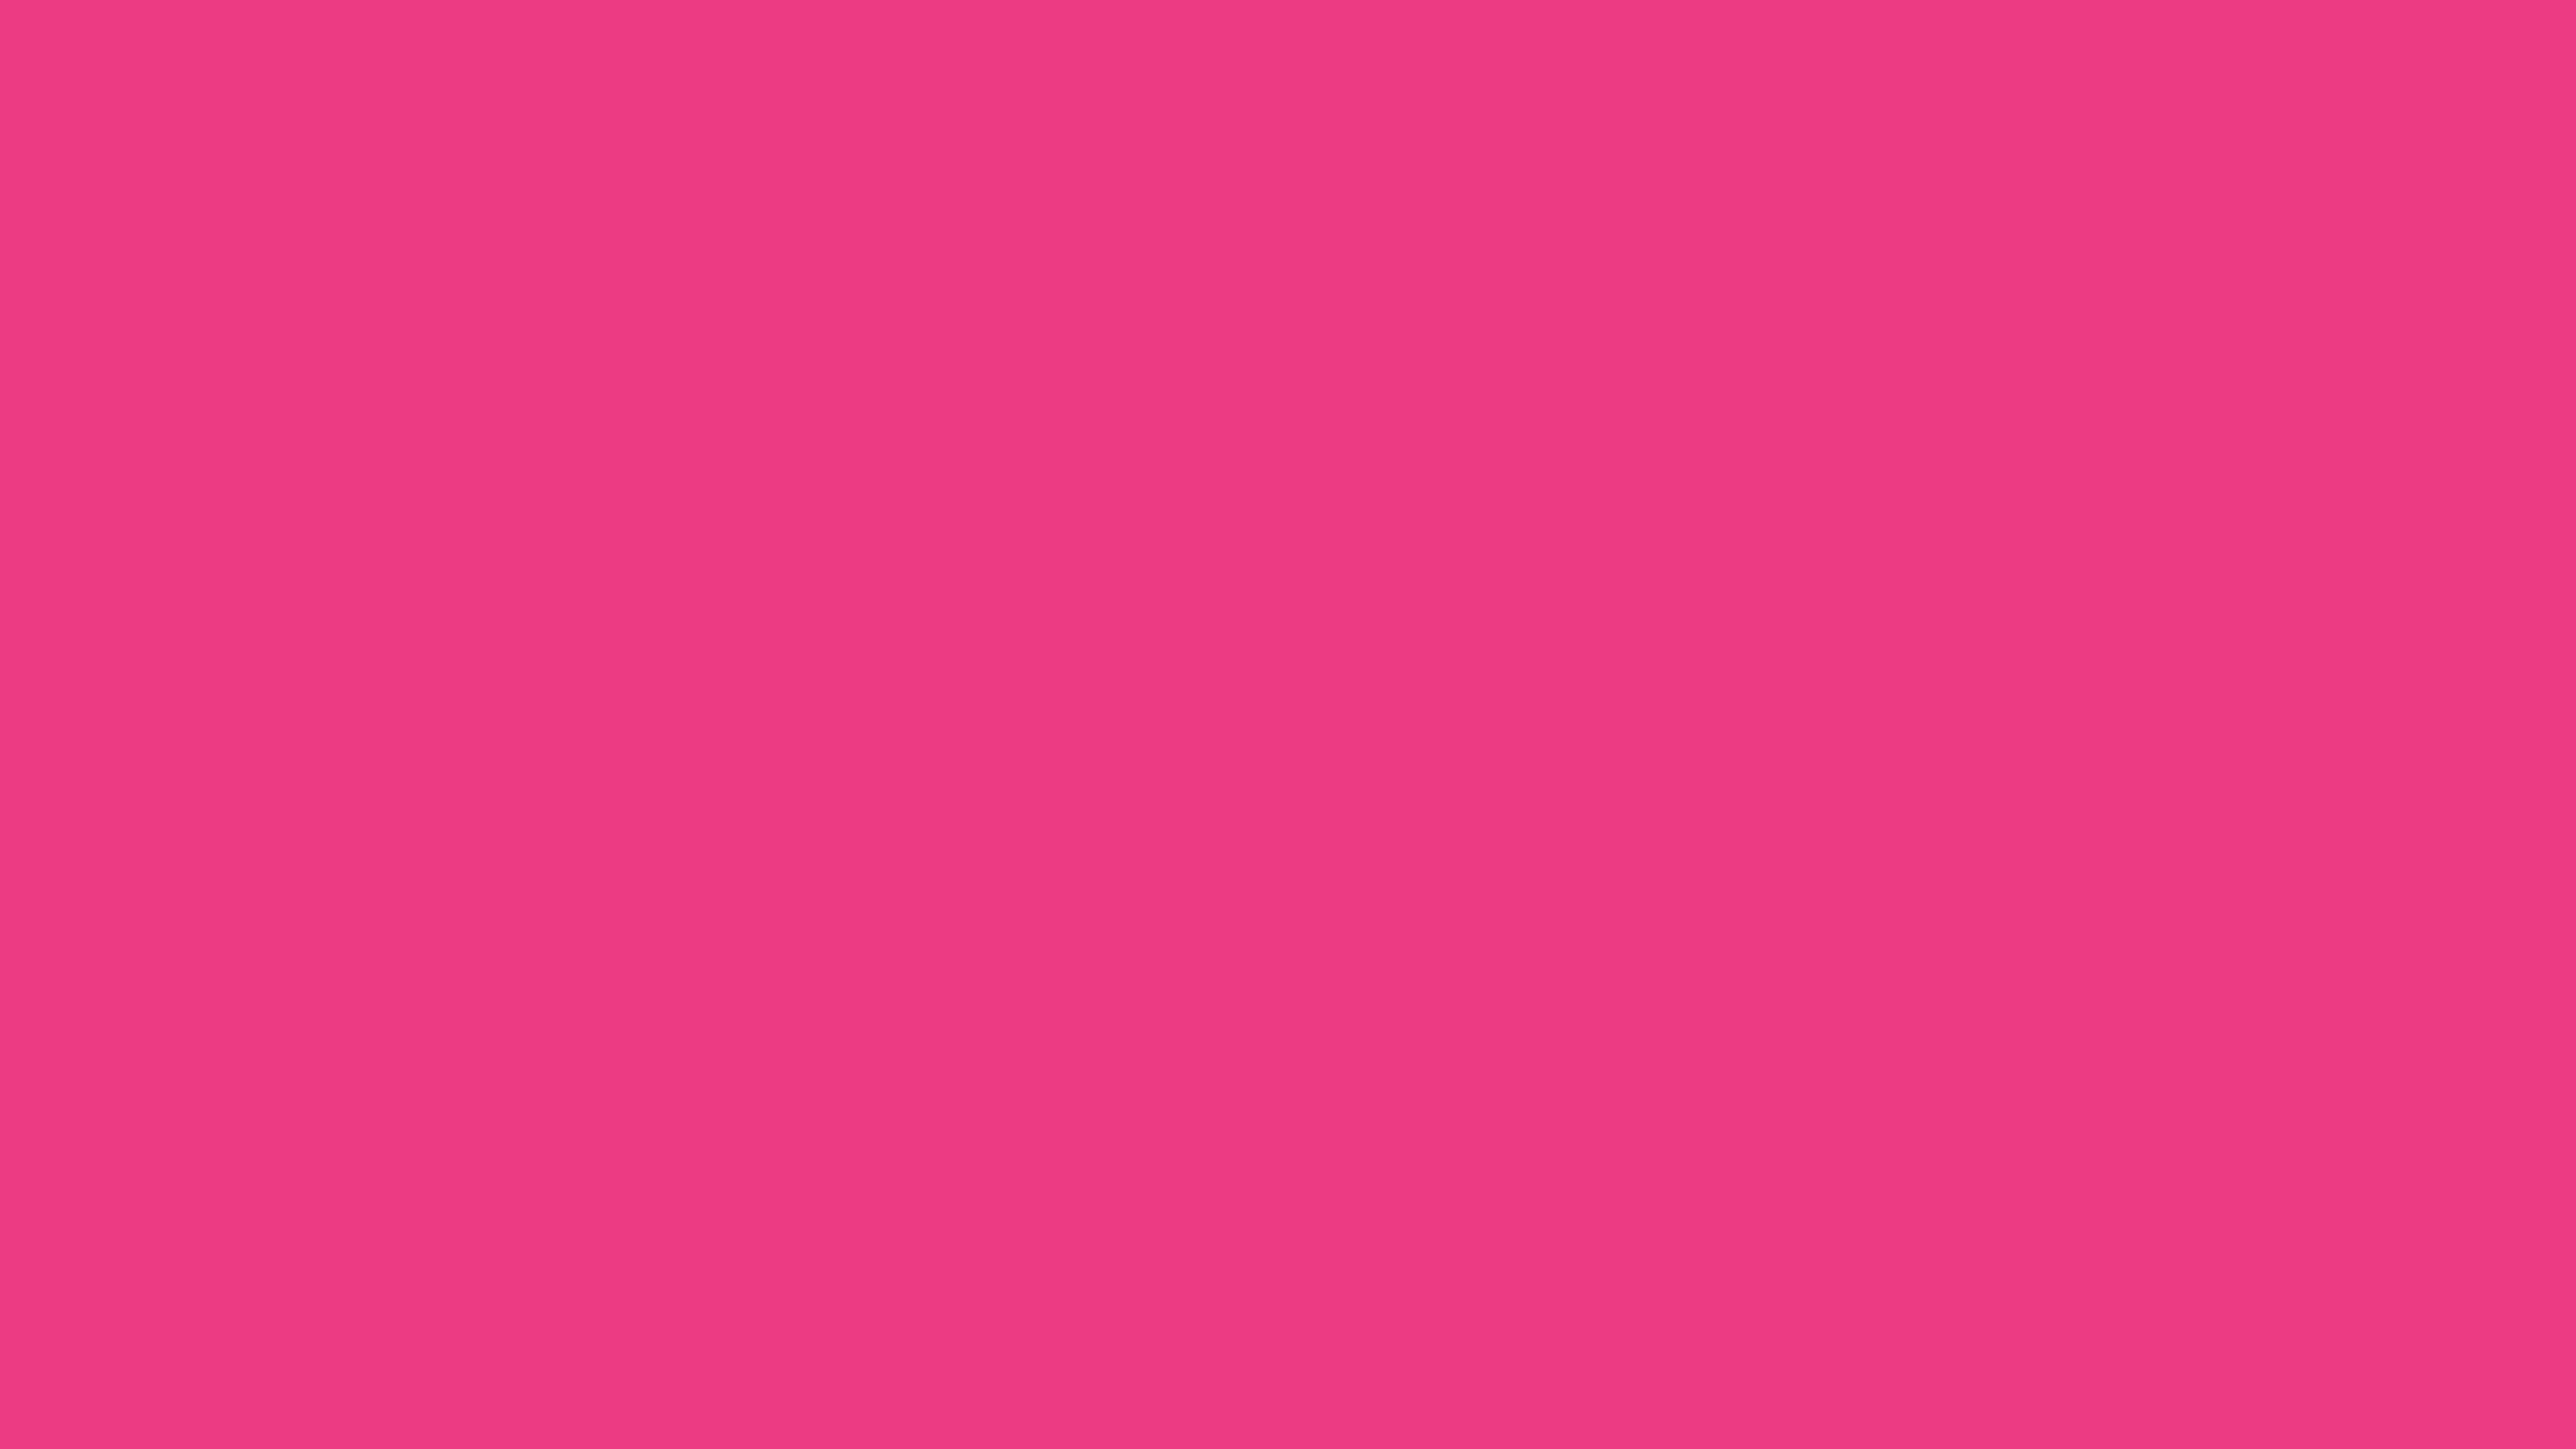 3840x2160 Cerise Pink Solid Color Background